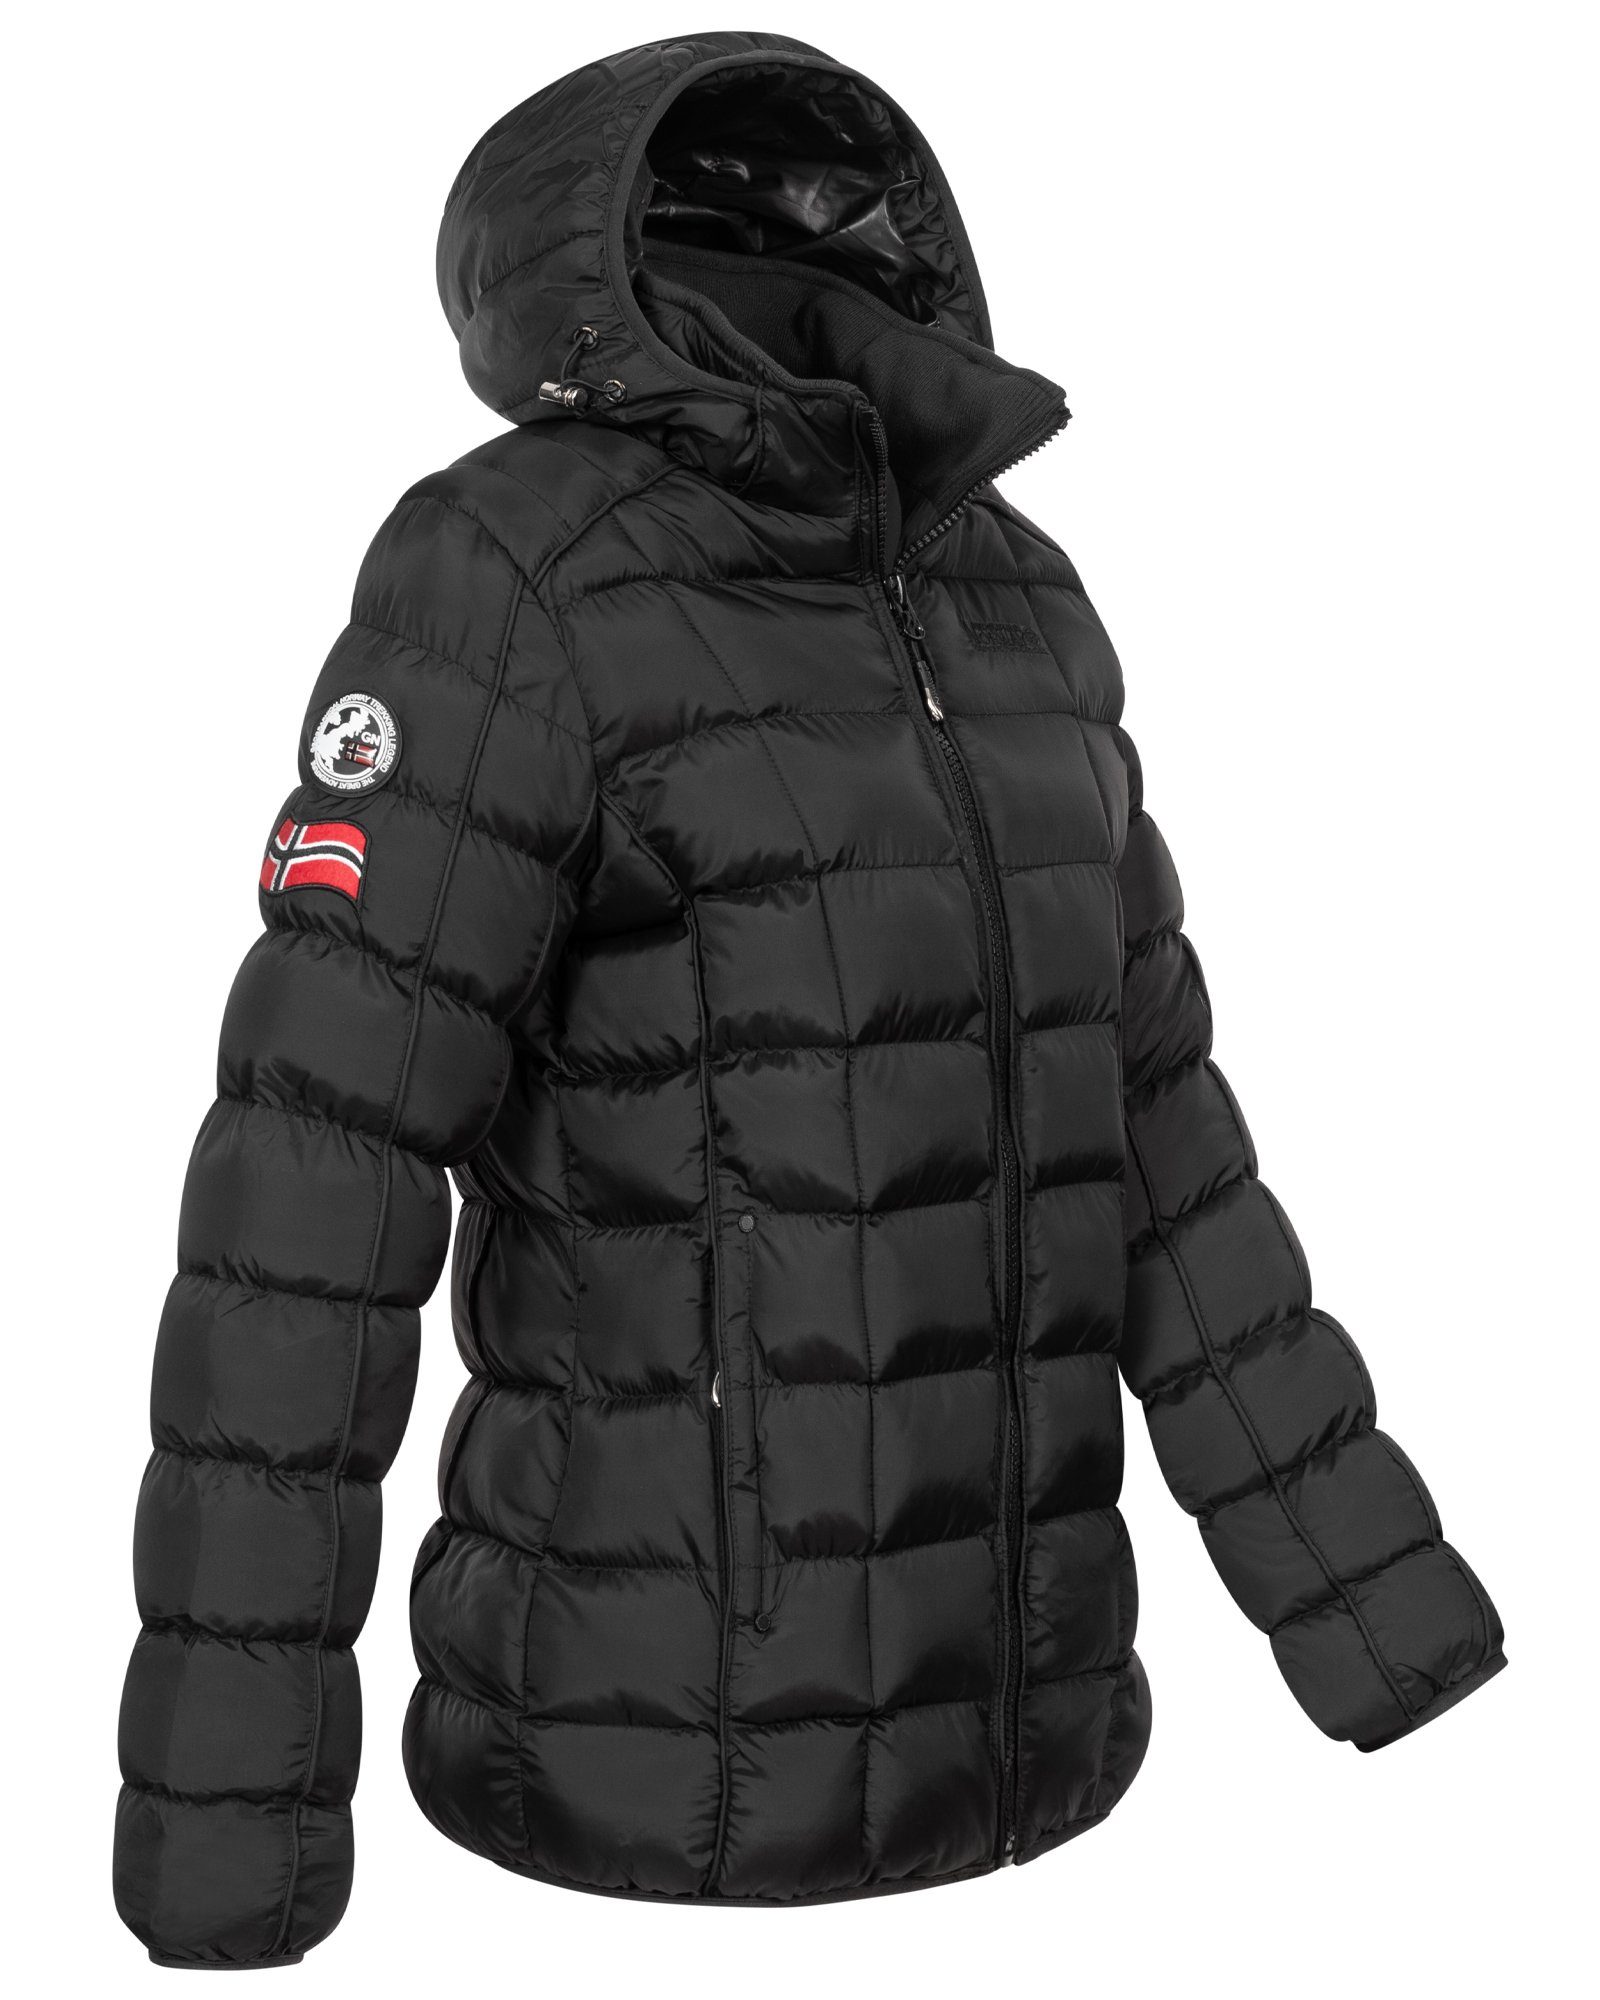 Parka Steppjacke Schwarz Norway Outdoor Jacke Gesteppt Winterjacke Geographical Steppjacke Kapuze Warm Damen